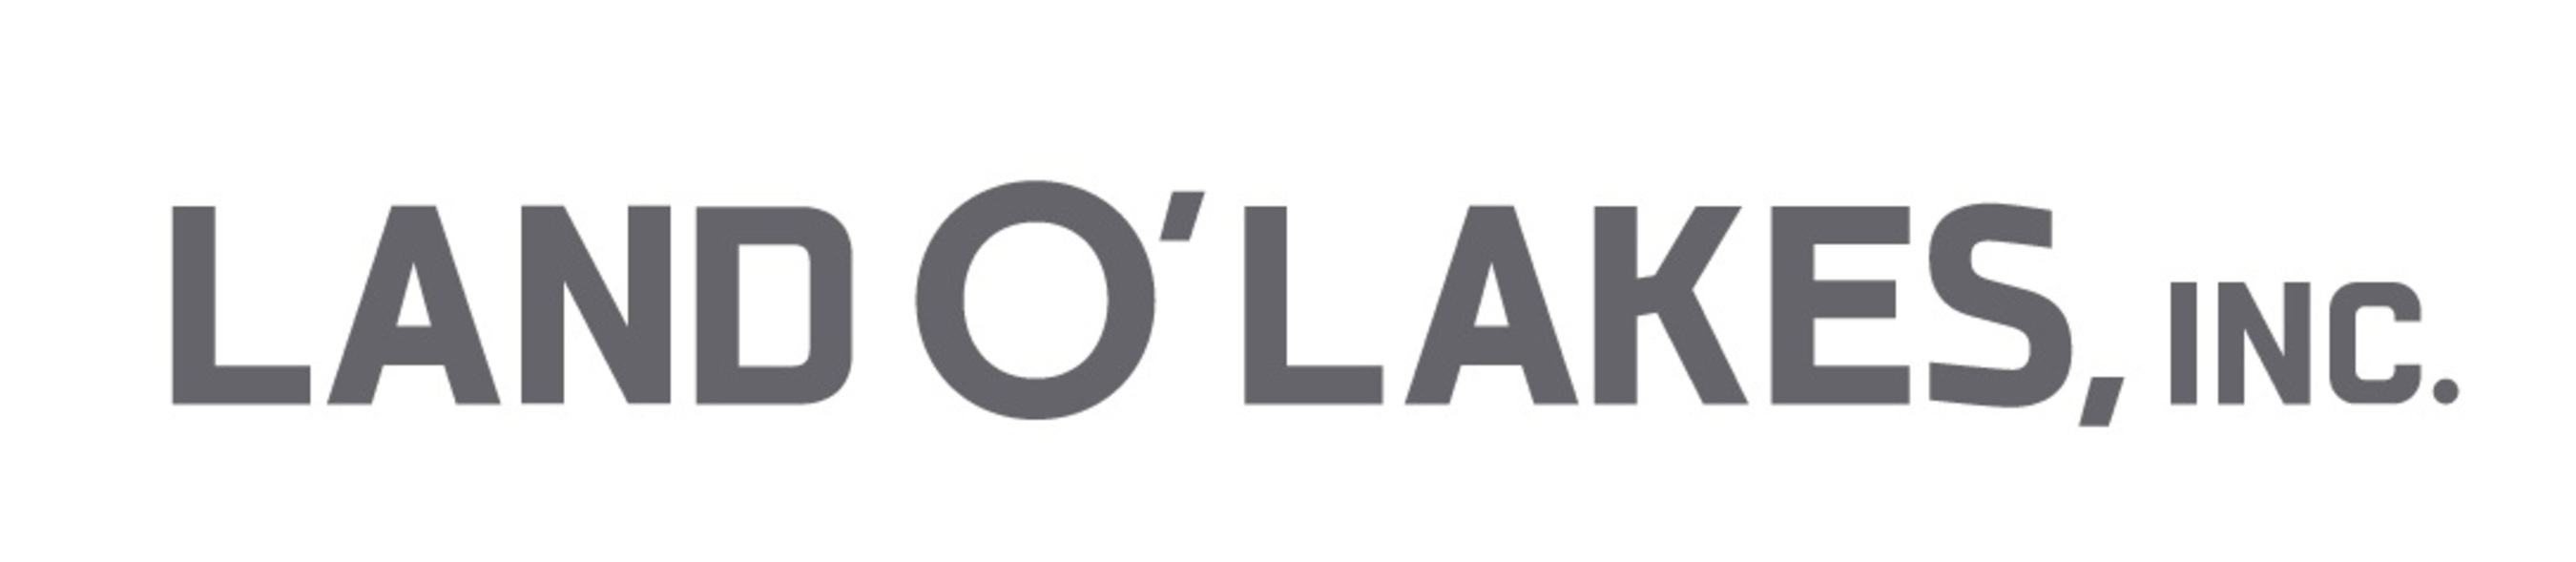 Land O'Lakes, Inc. Logo